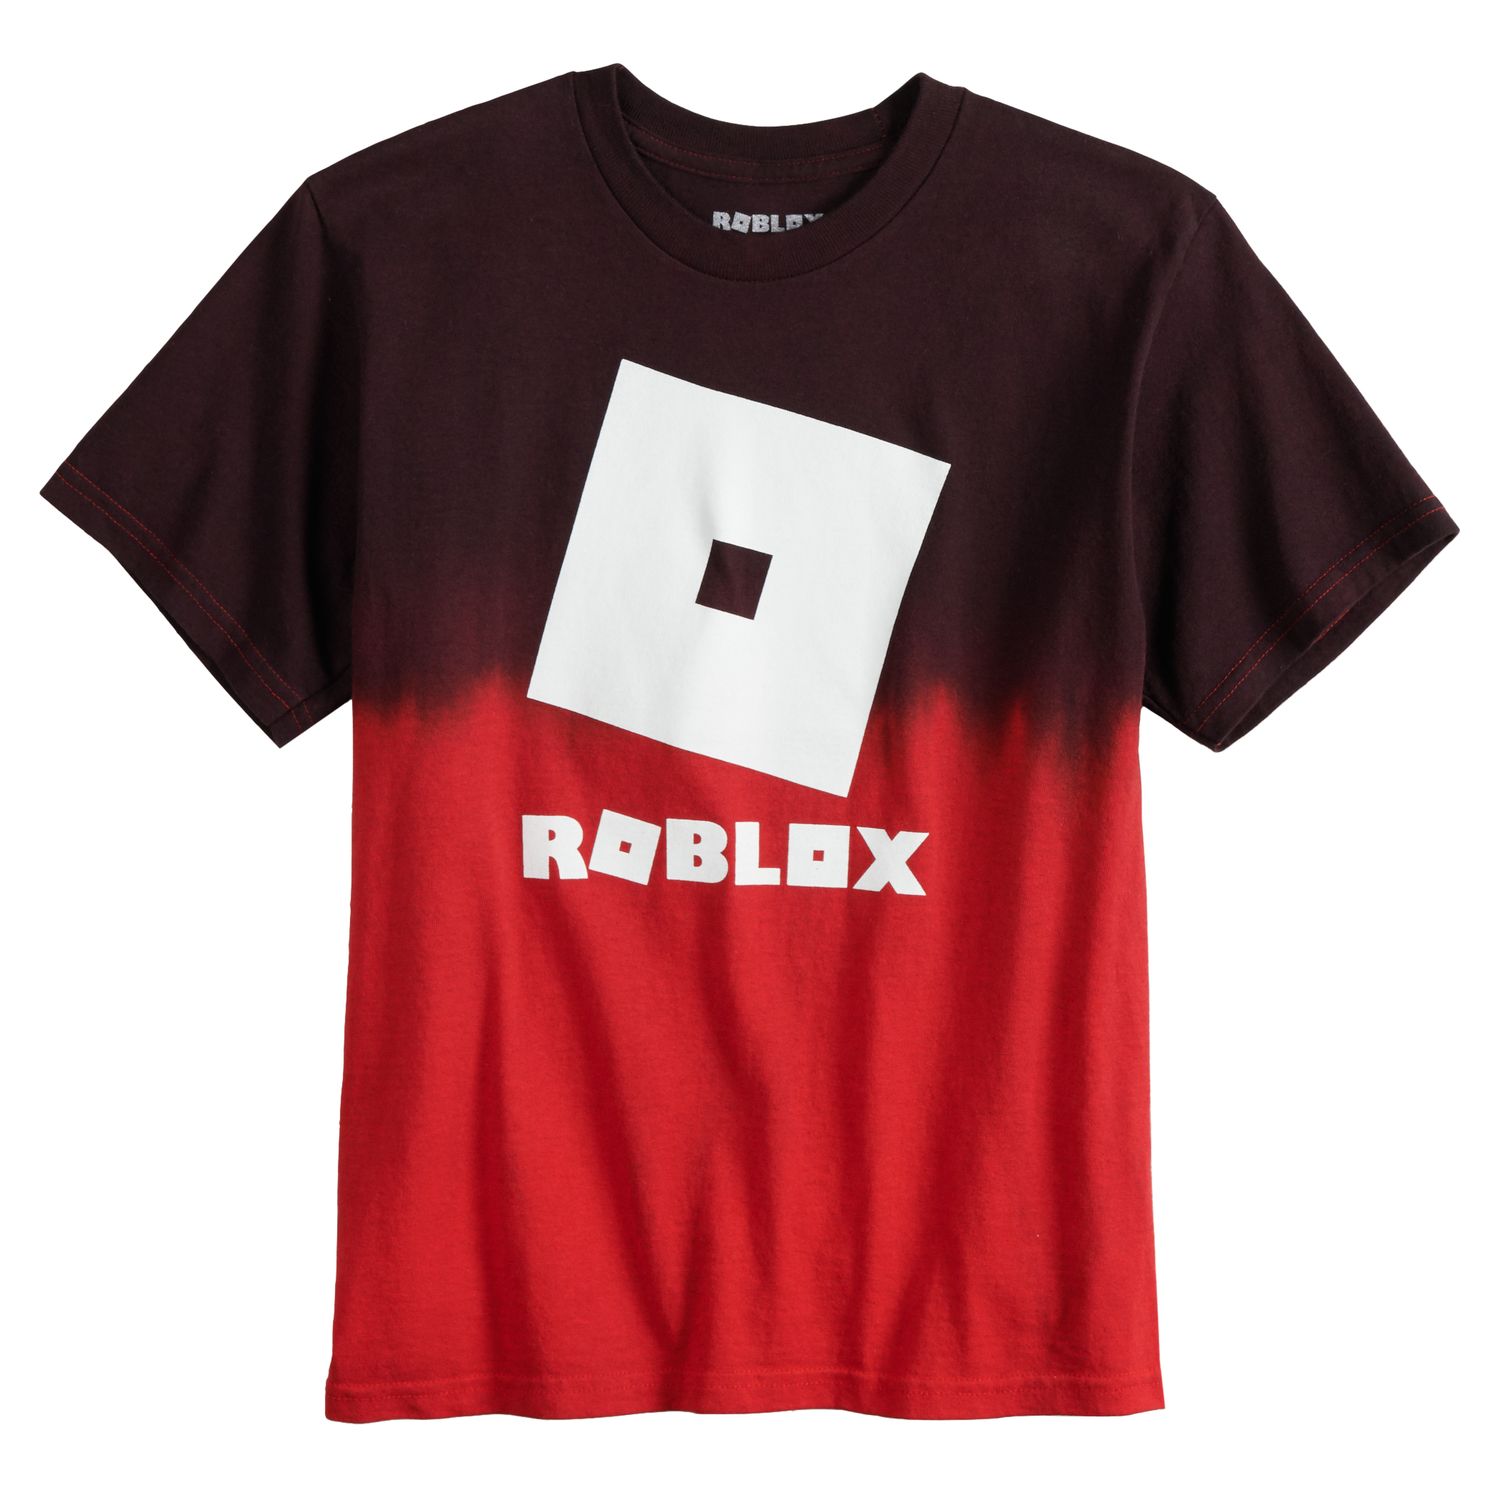 Roblox T Shirt For Boys - roblox t shirt real life